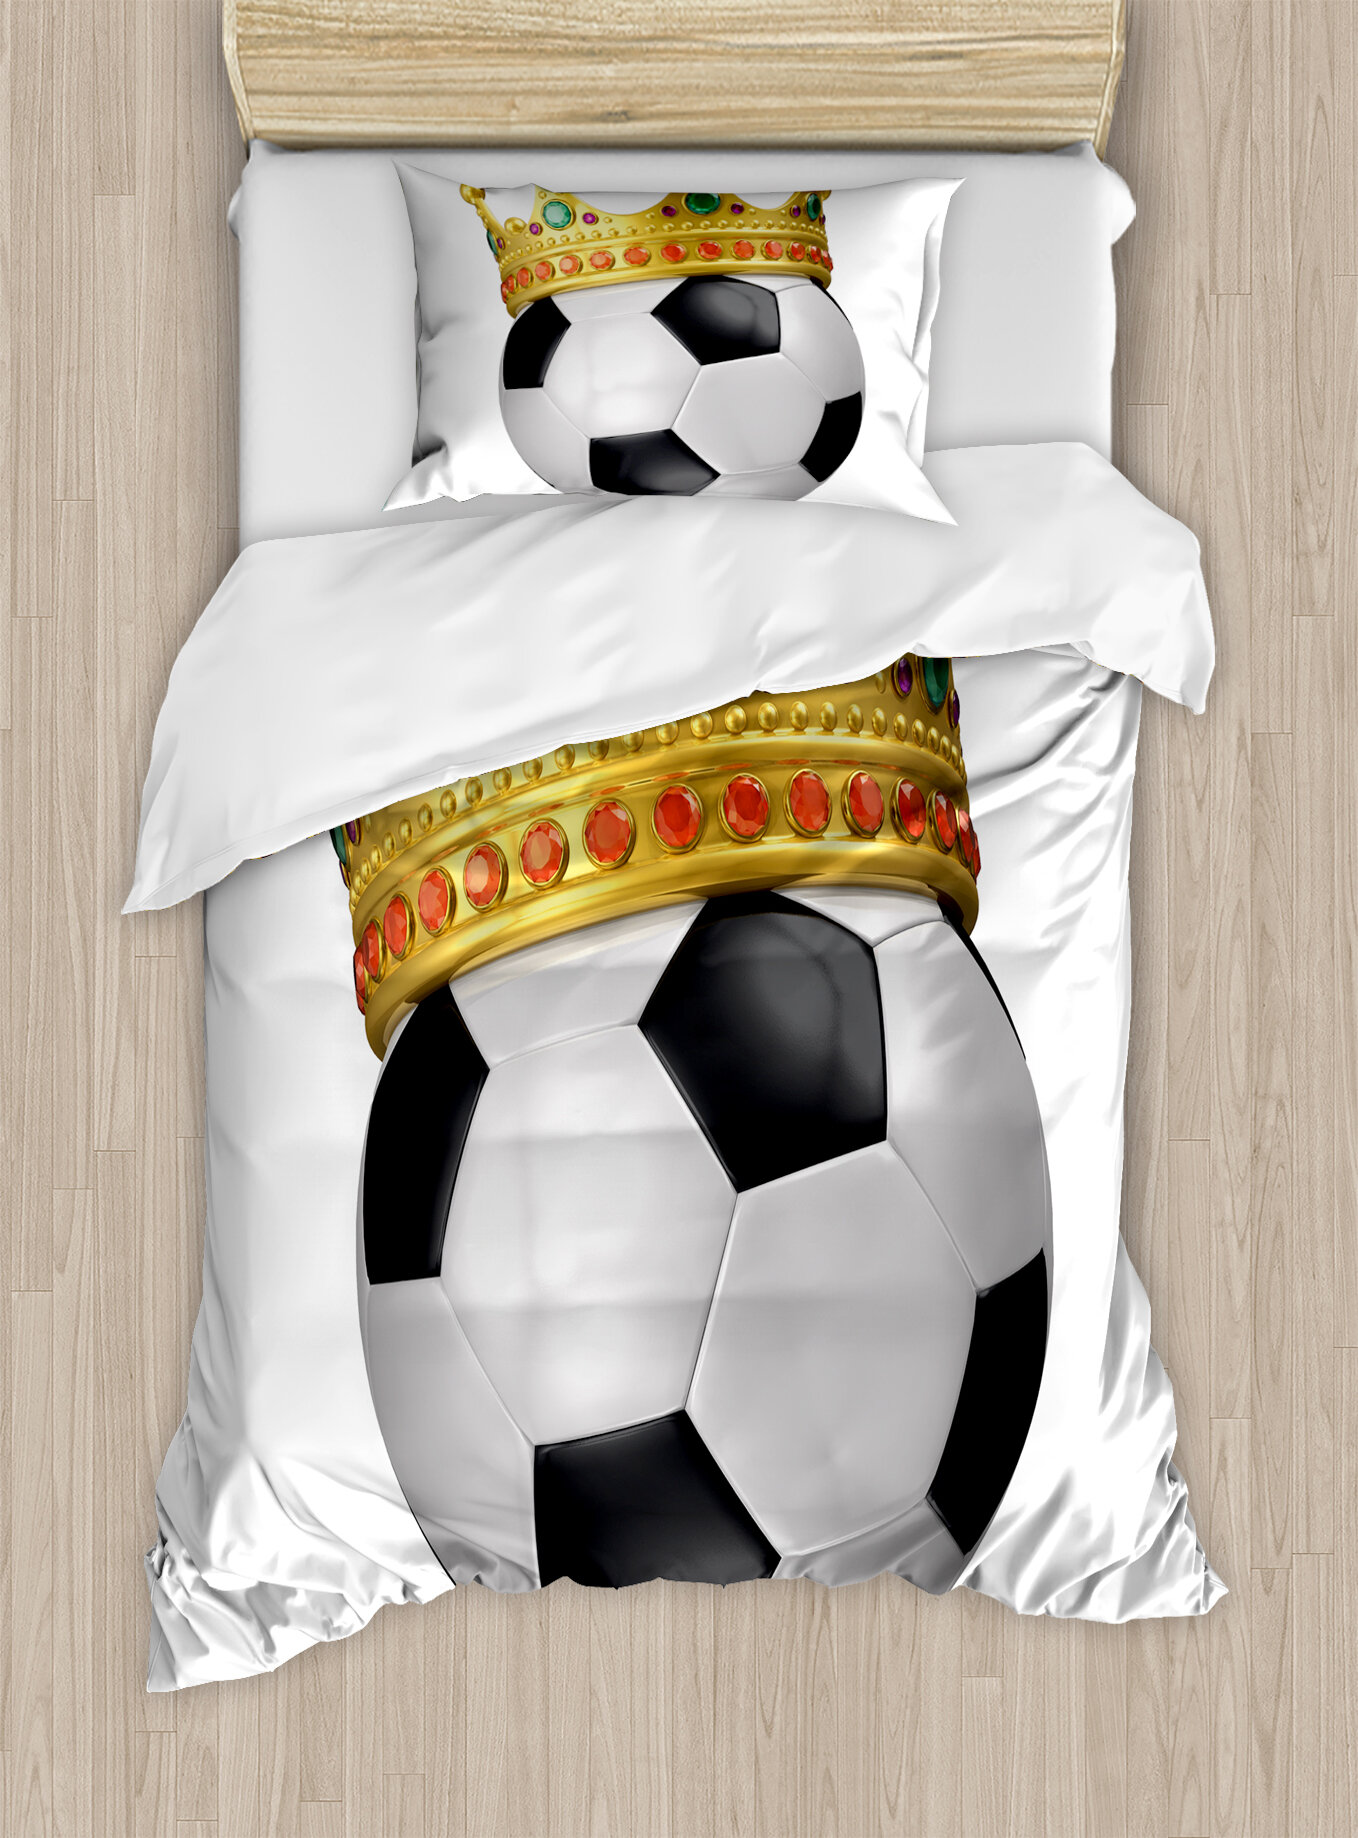 Irish Full Bedding Duvet Cover Set 4 Piece Sports Theme Soccer